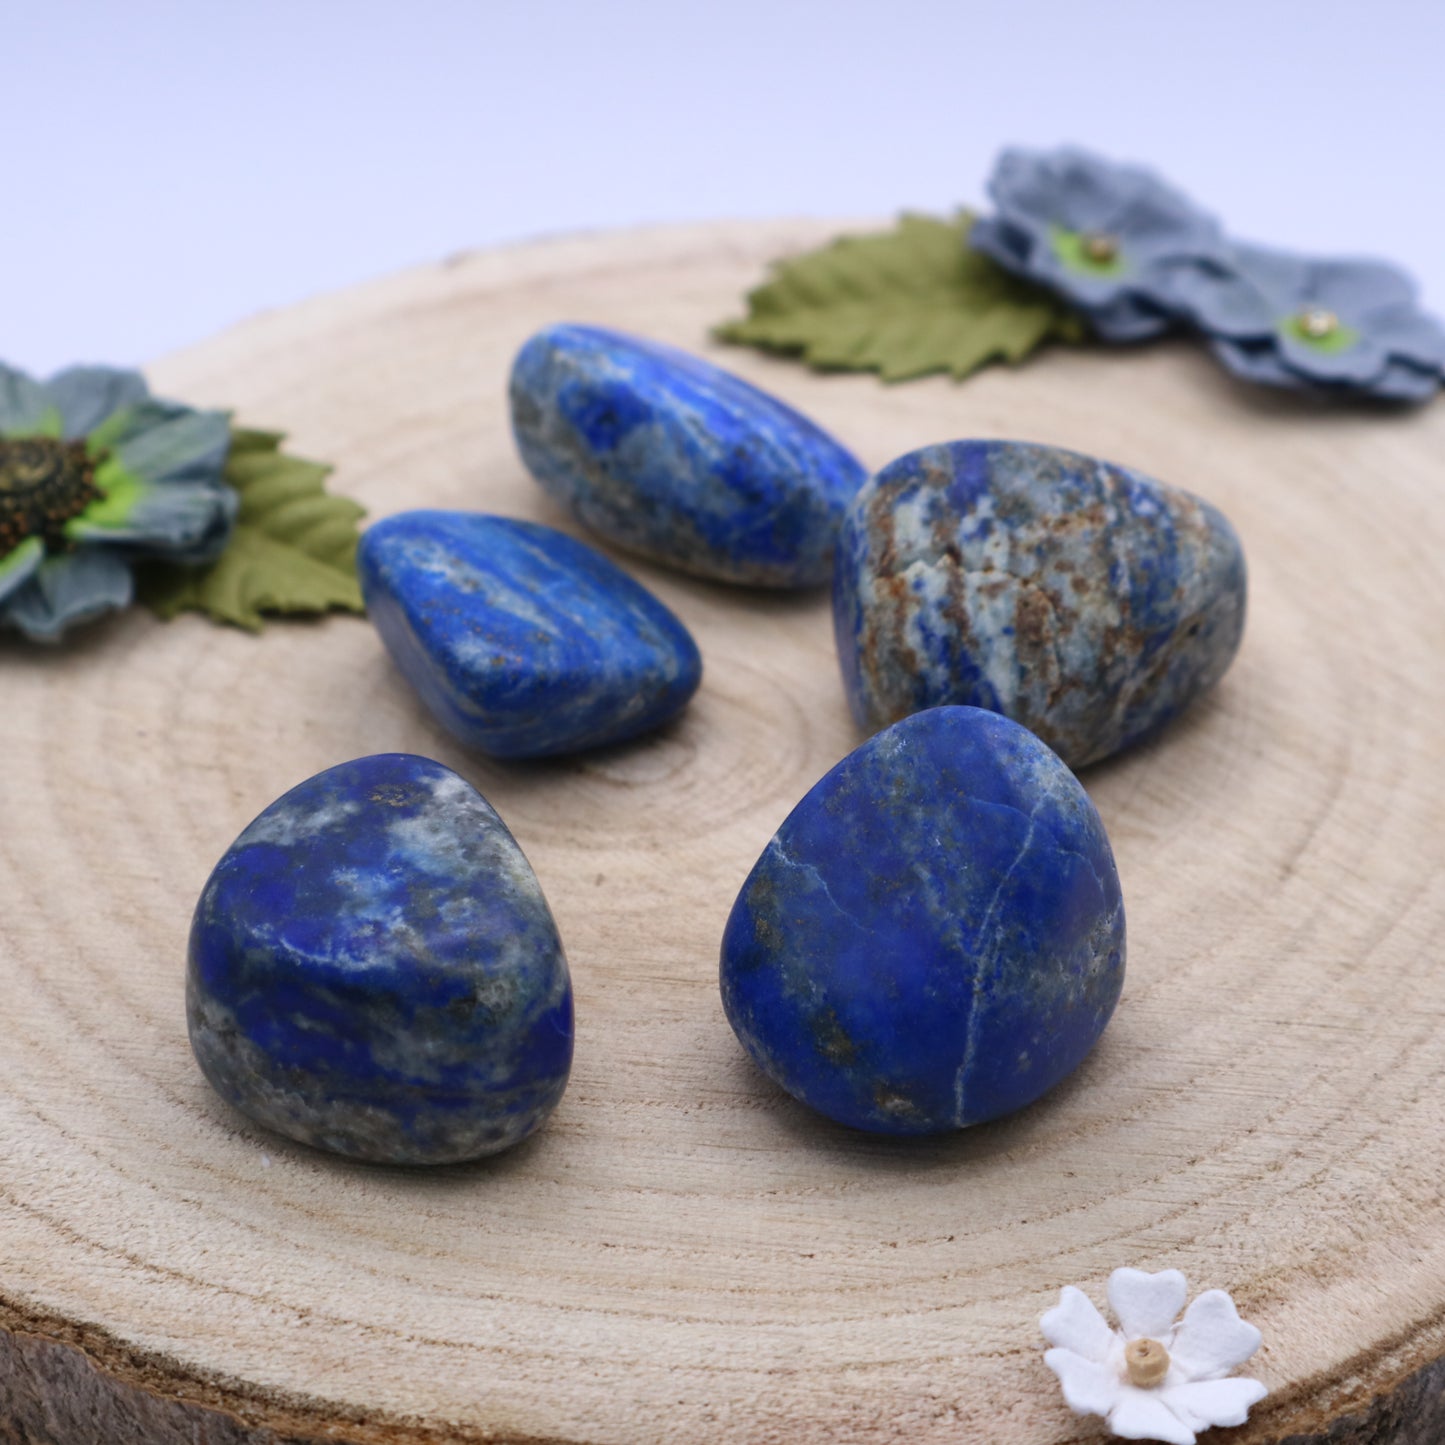 Five pieces of Lapis Lazuli crystals